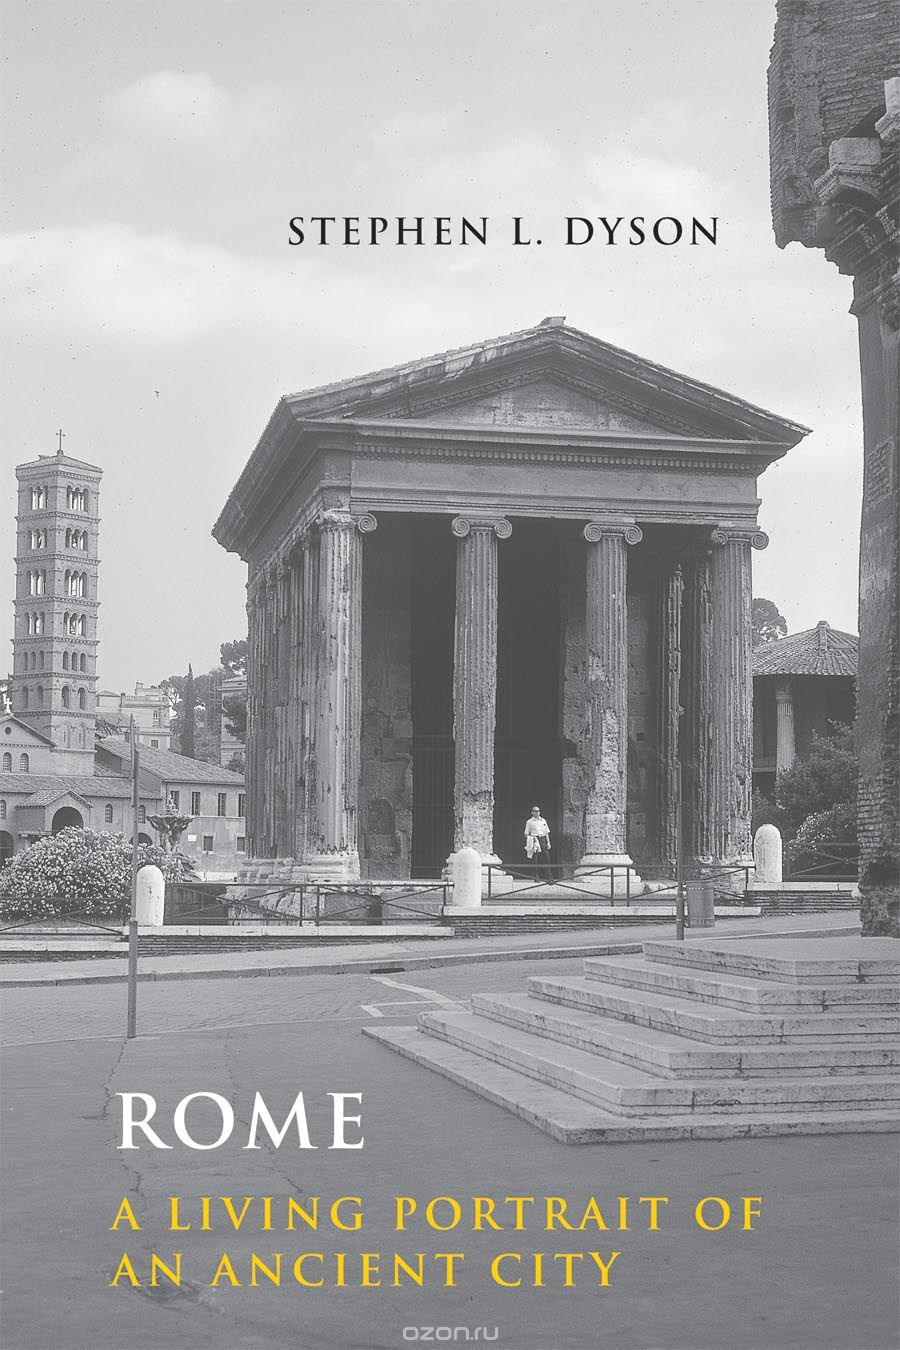 Rome – A Living Portrait of an Ancient City